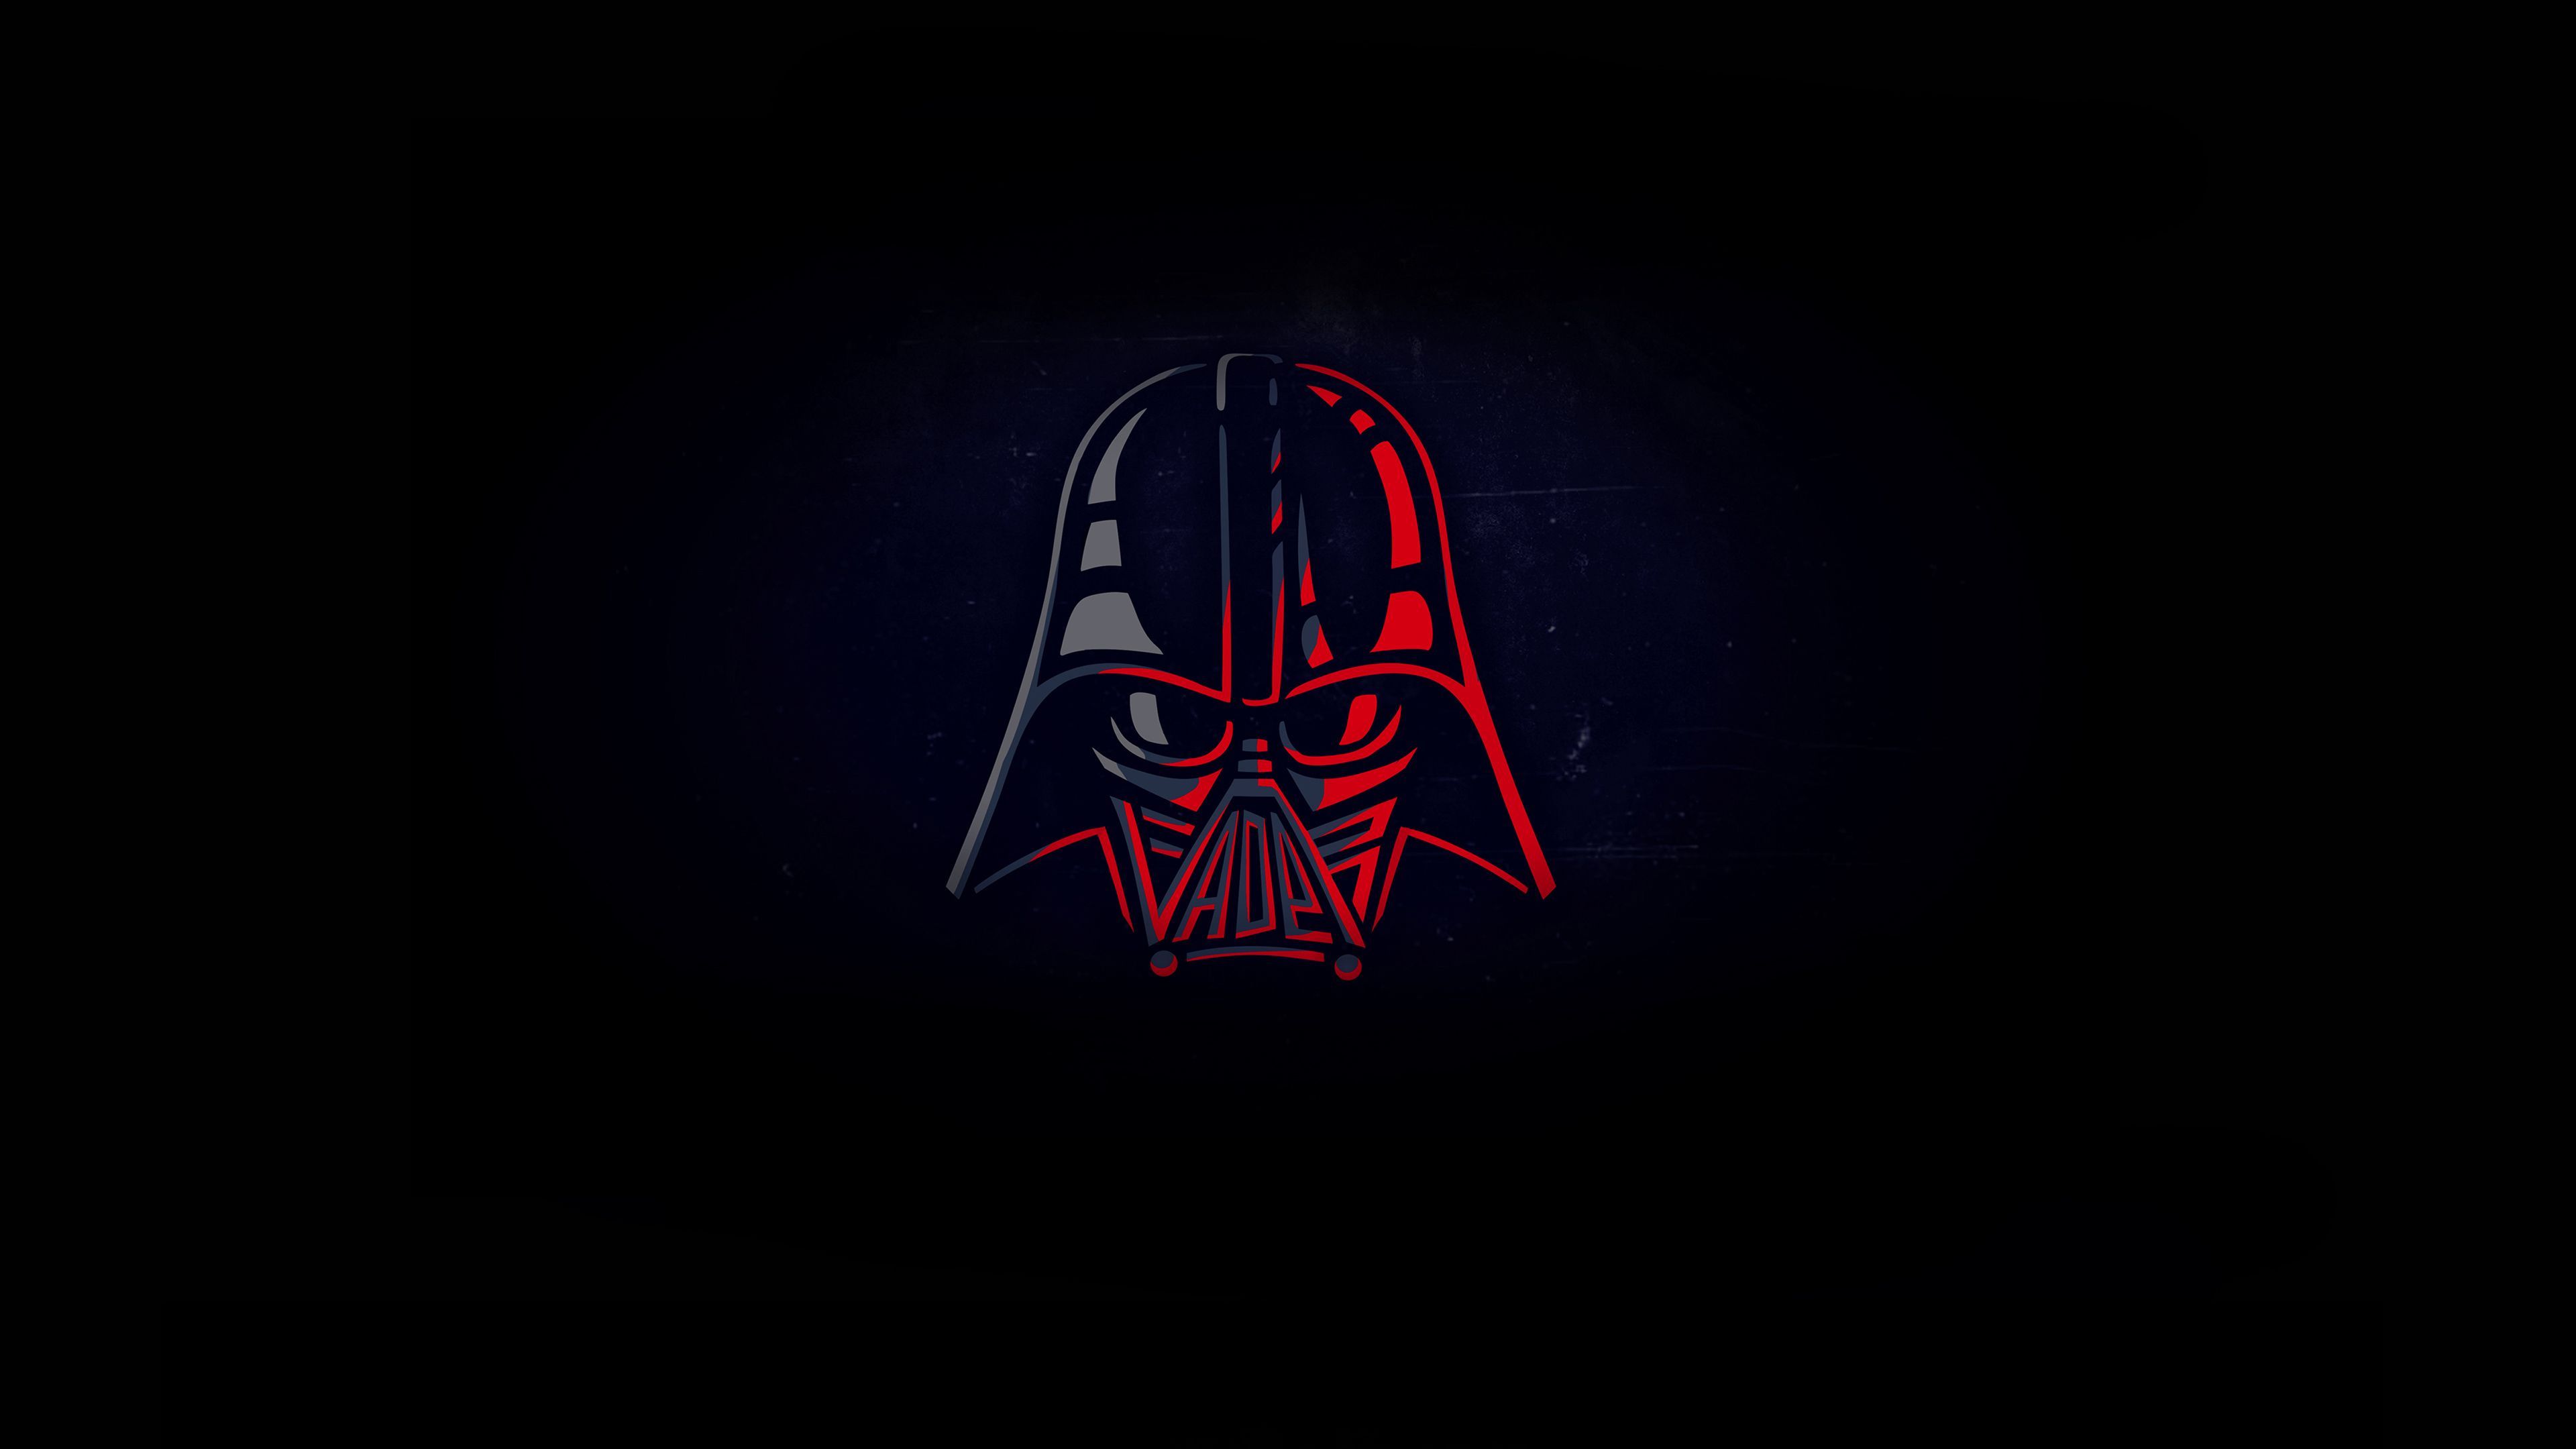 6 Darth Vader Live Wallpapers, Animated Wallpapers - MoeWalls